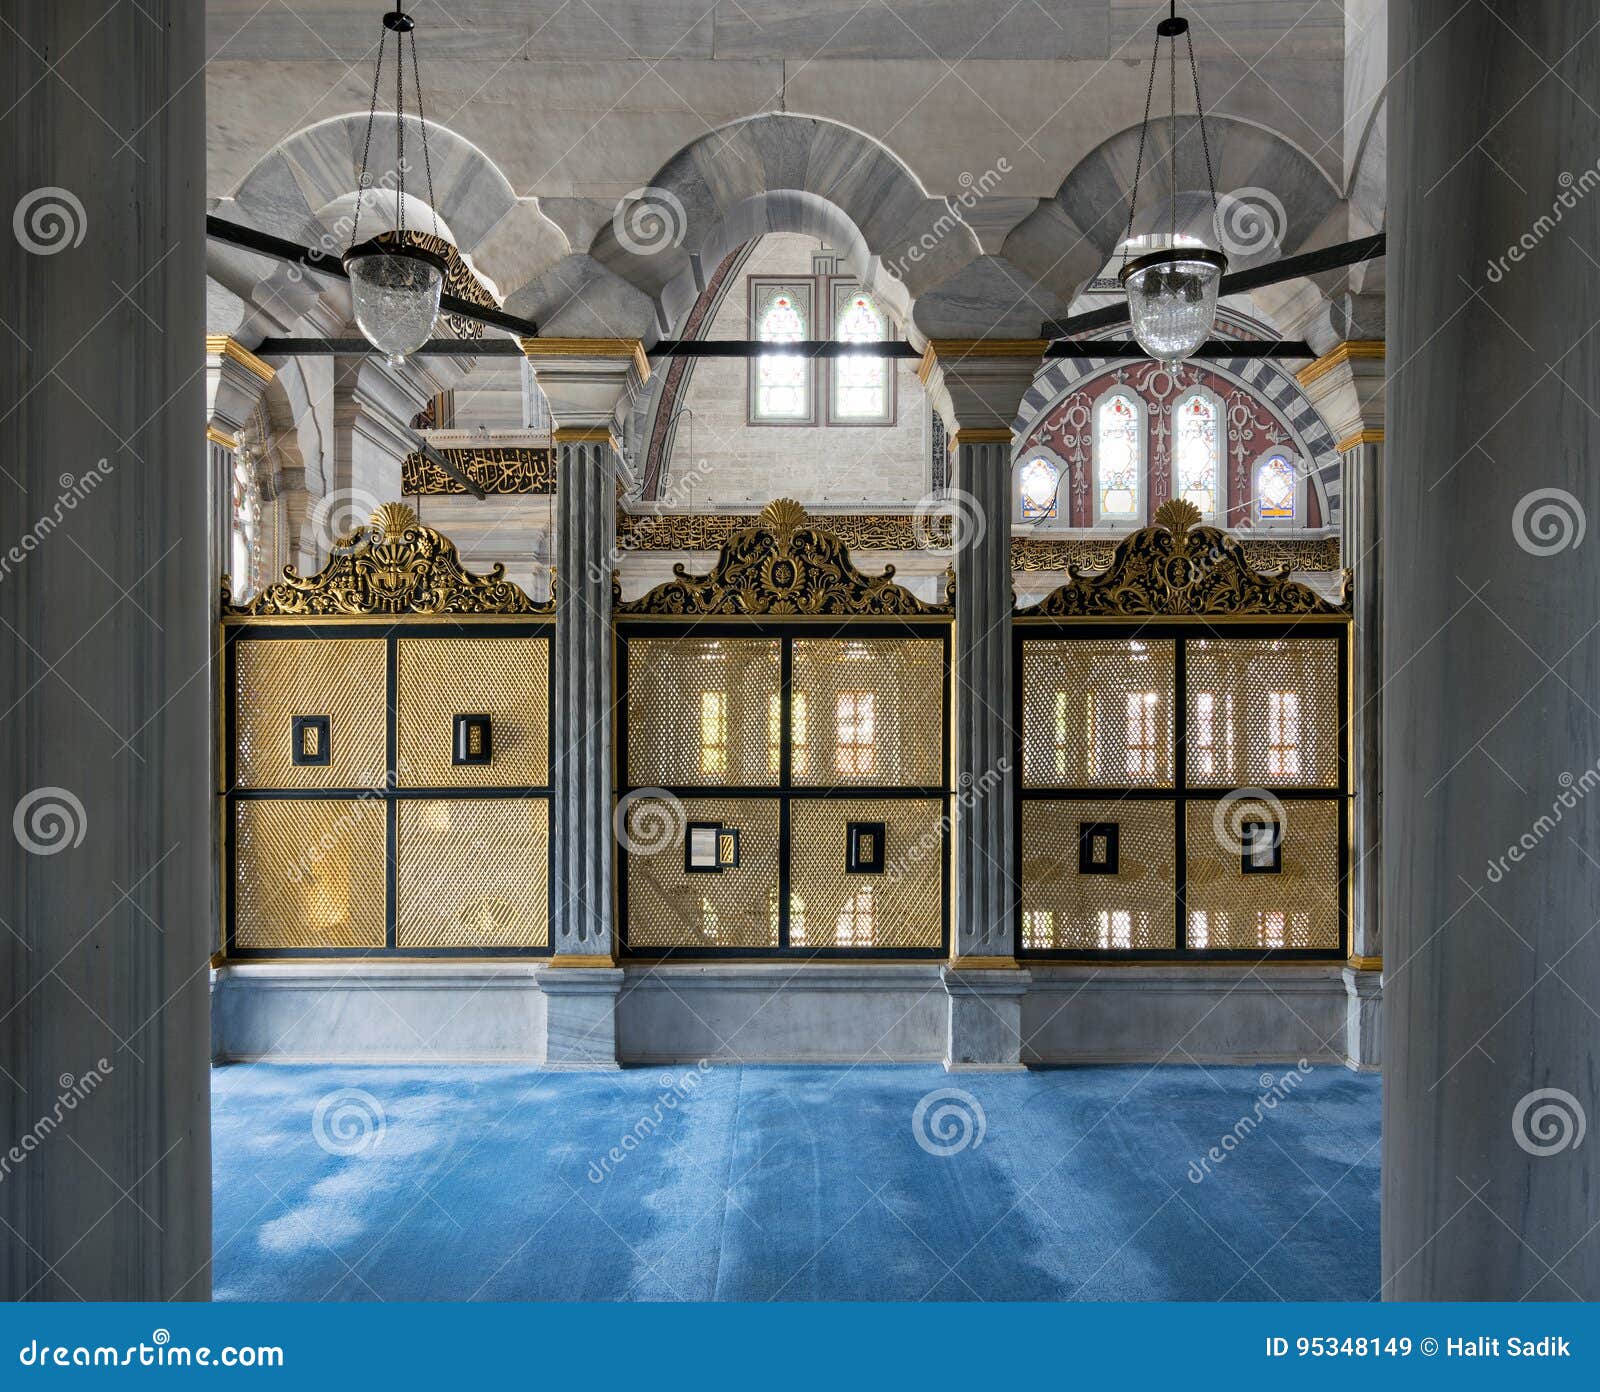 gold painted decorated interleaved wooden windows mashrabiya inside three marble arches, nuruosmaniye mosque, istanbul, turkey